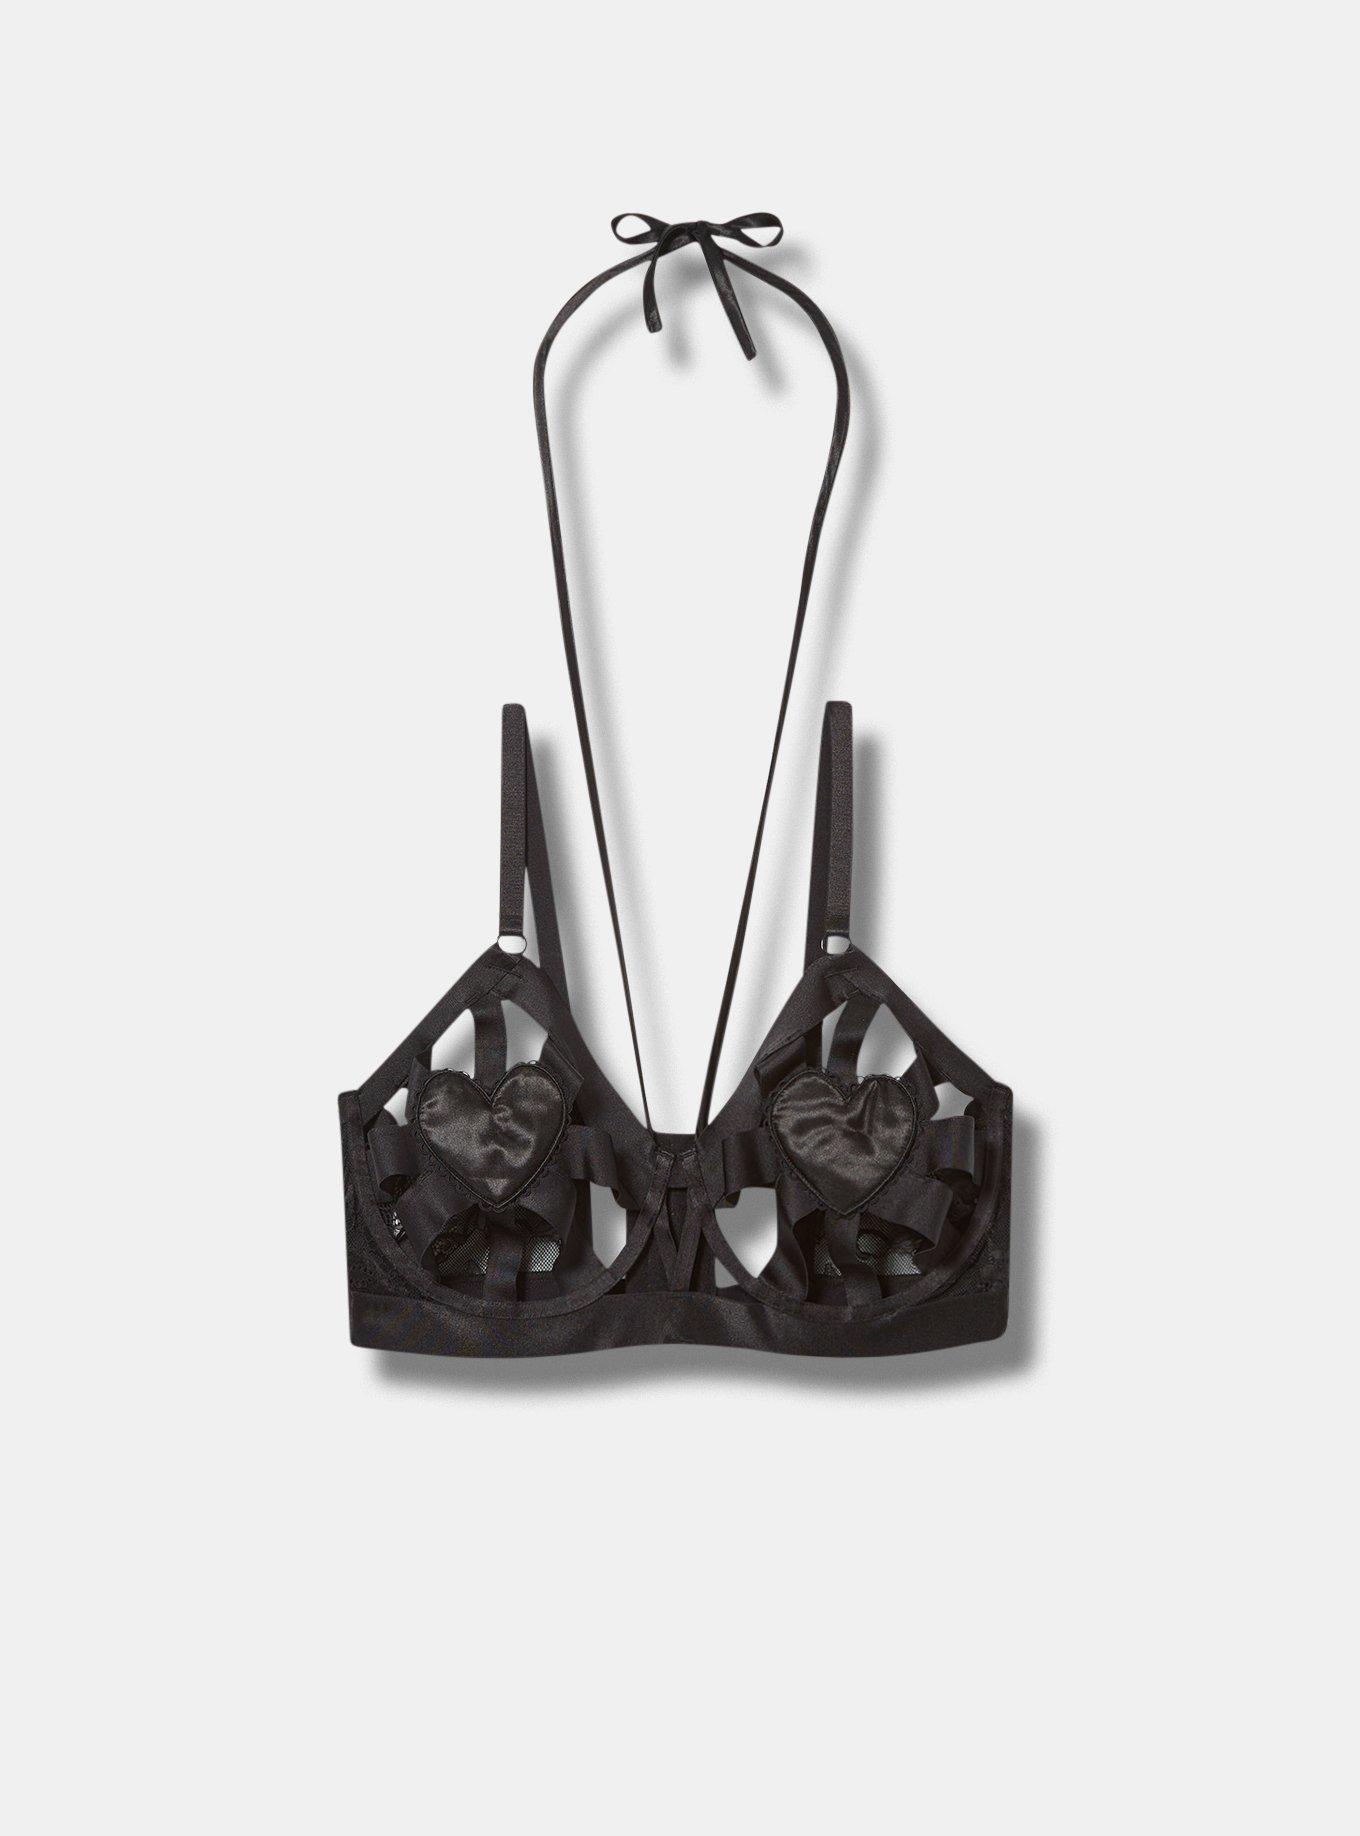 Buy Heartware Open-Cup Strappy Demi Bra - Order Bras online 1123786600 -  Victoria's Secret US